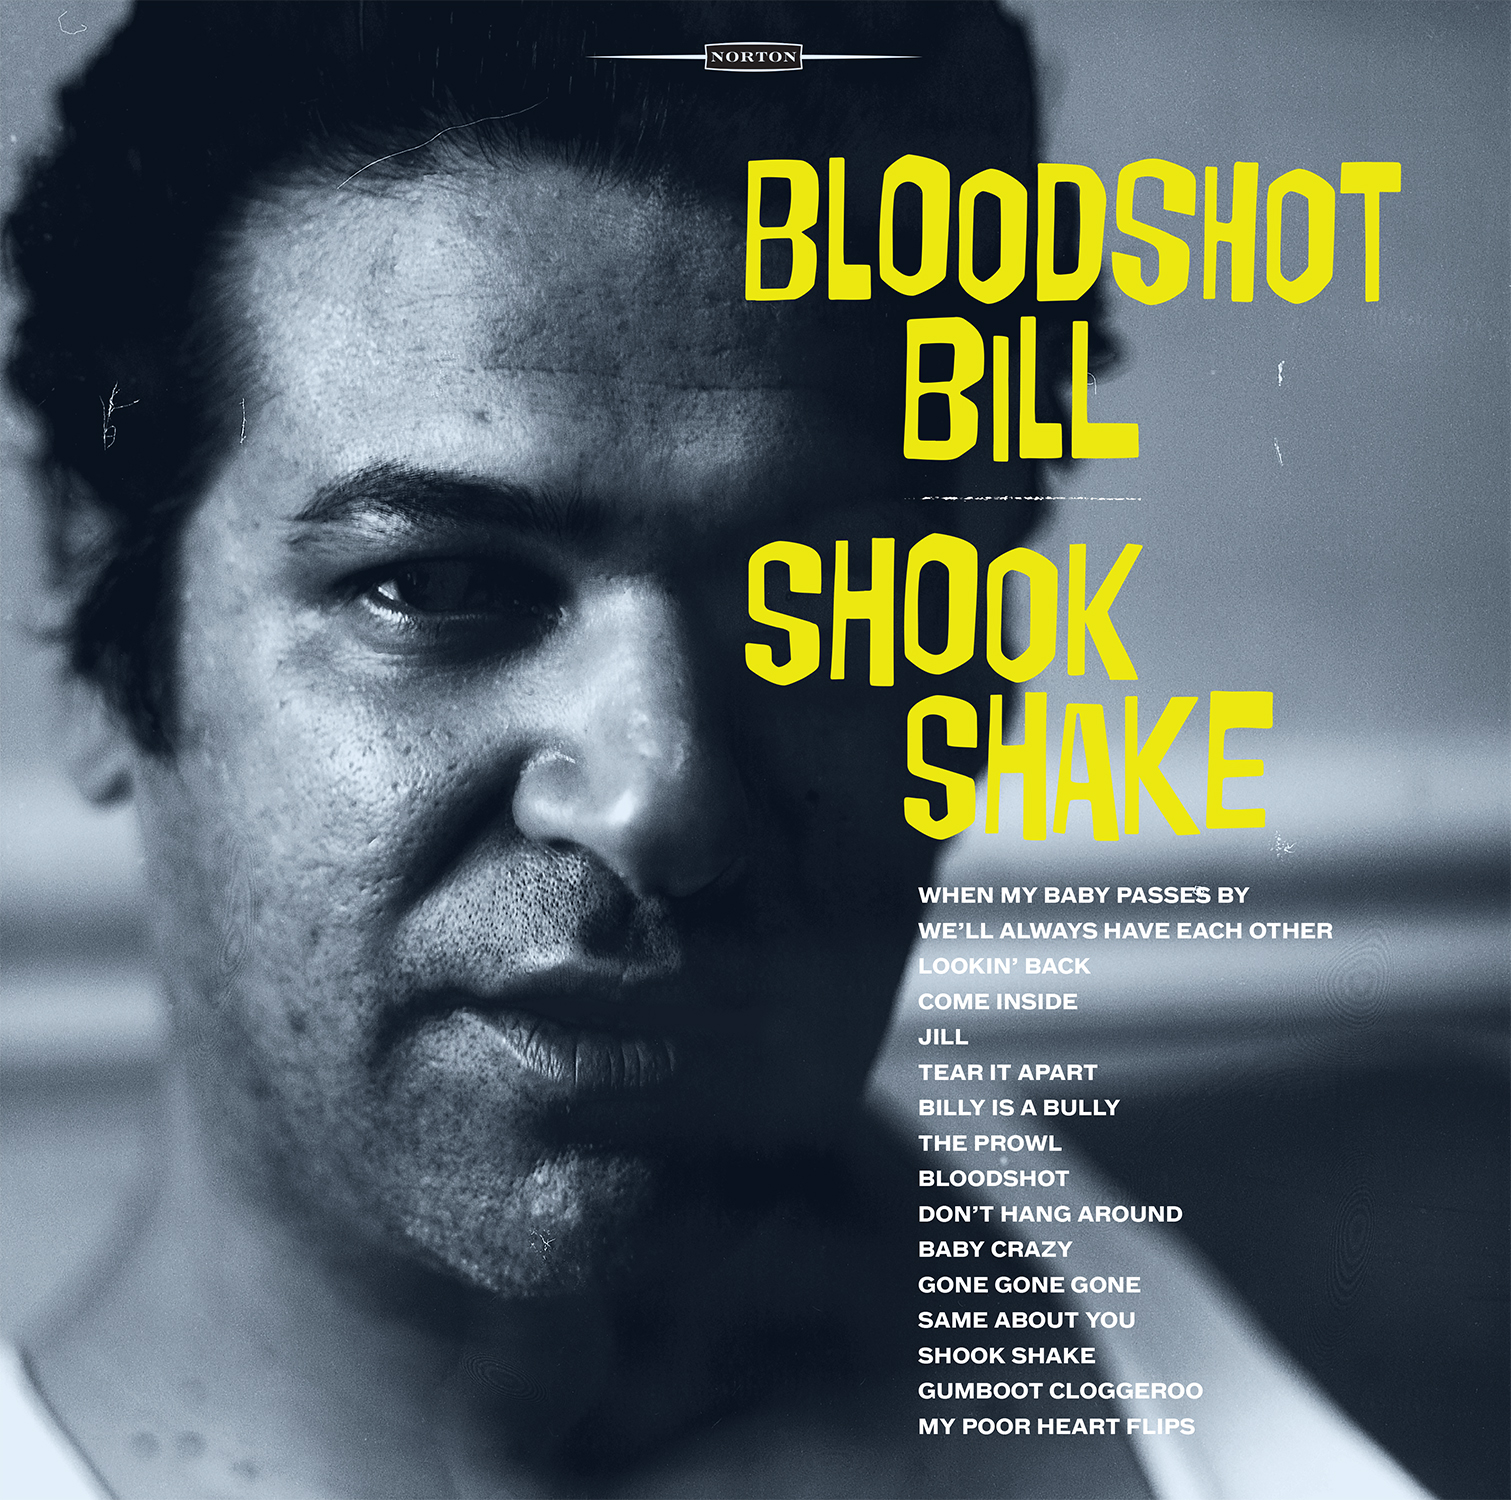 Bloodshot Bill - Shook Shake LP sleeve